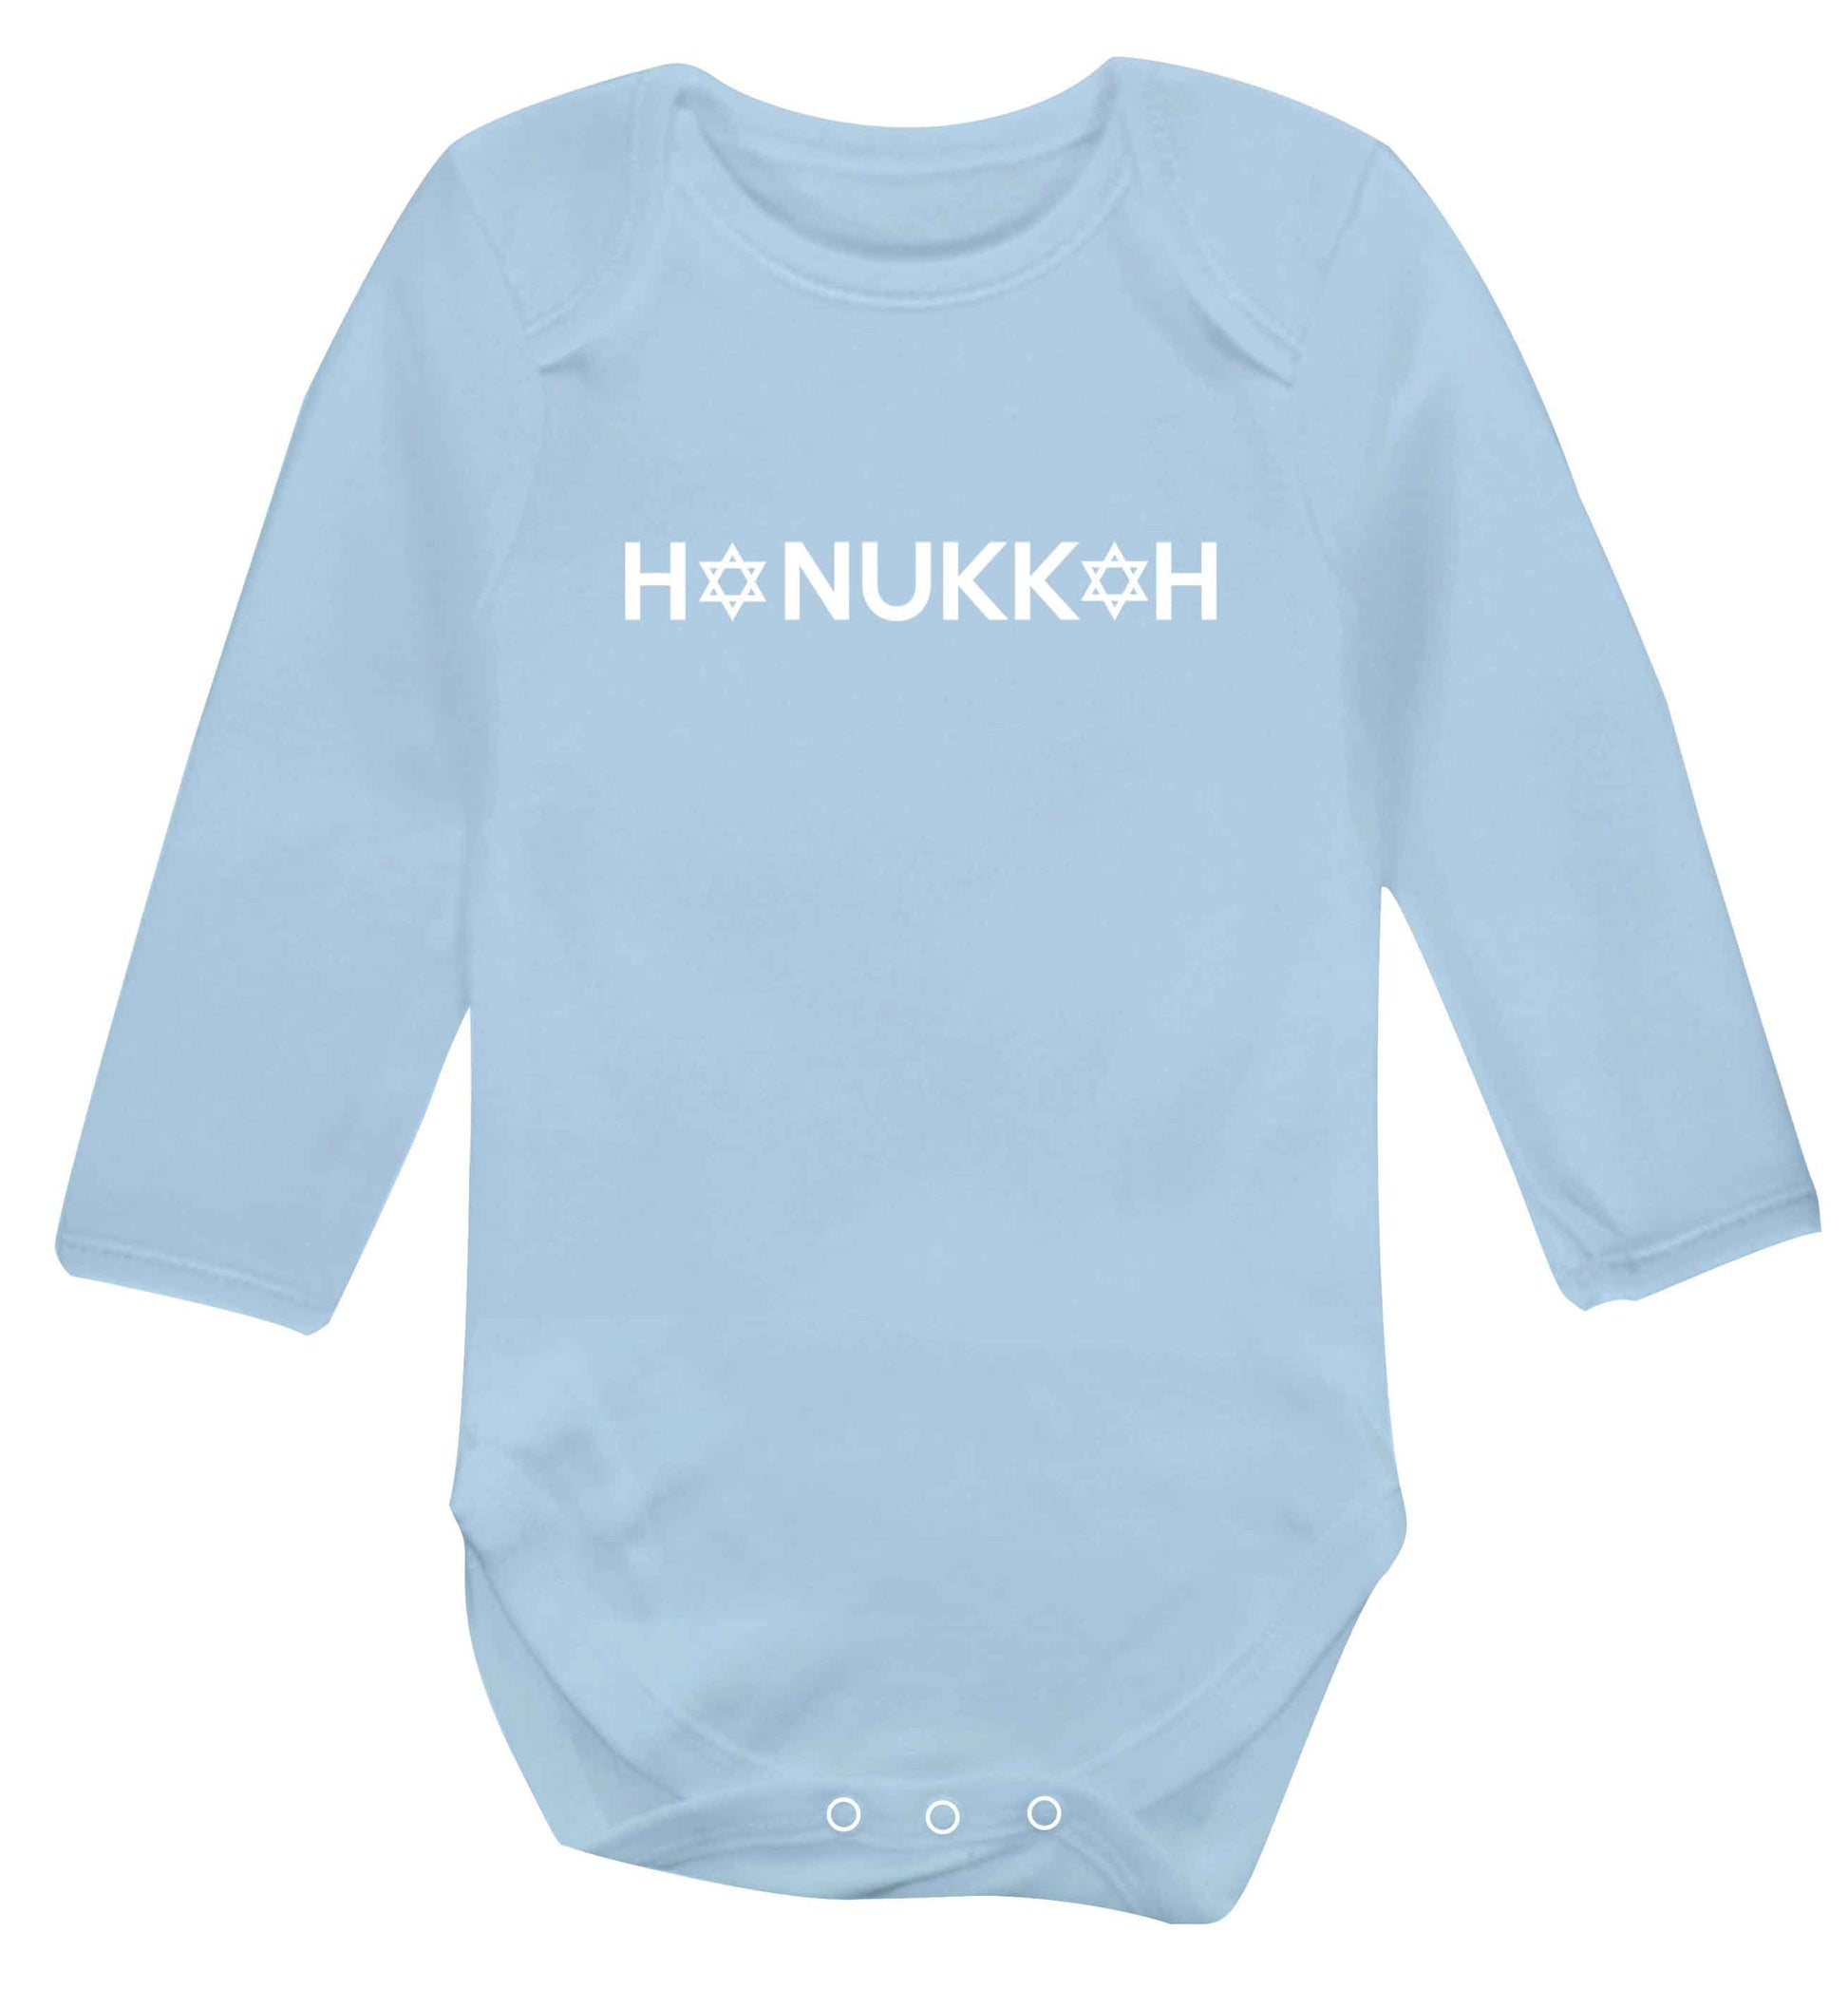 Hanukkah star of david baby vest long sleeved pale blue 6-12 months